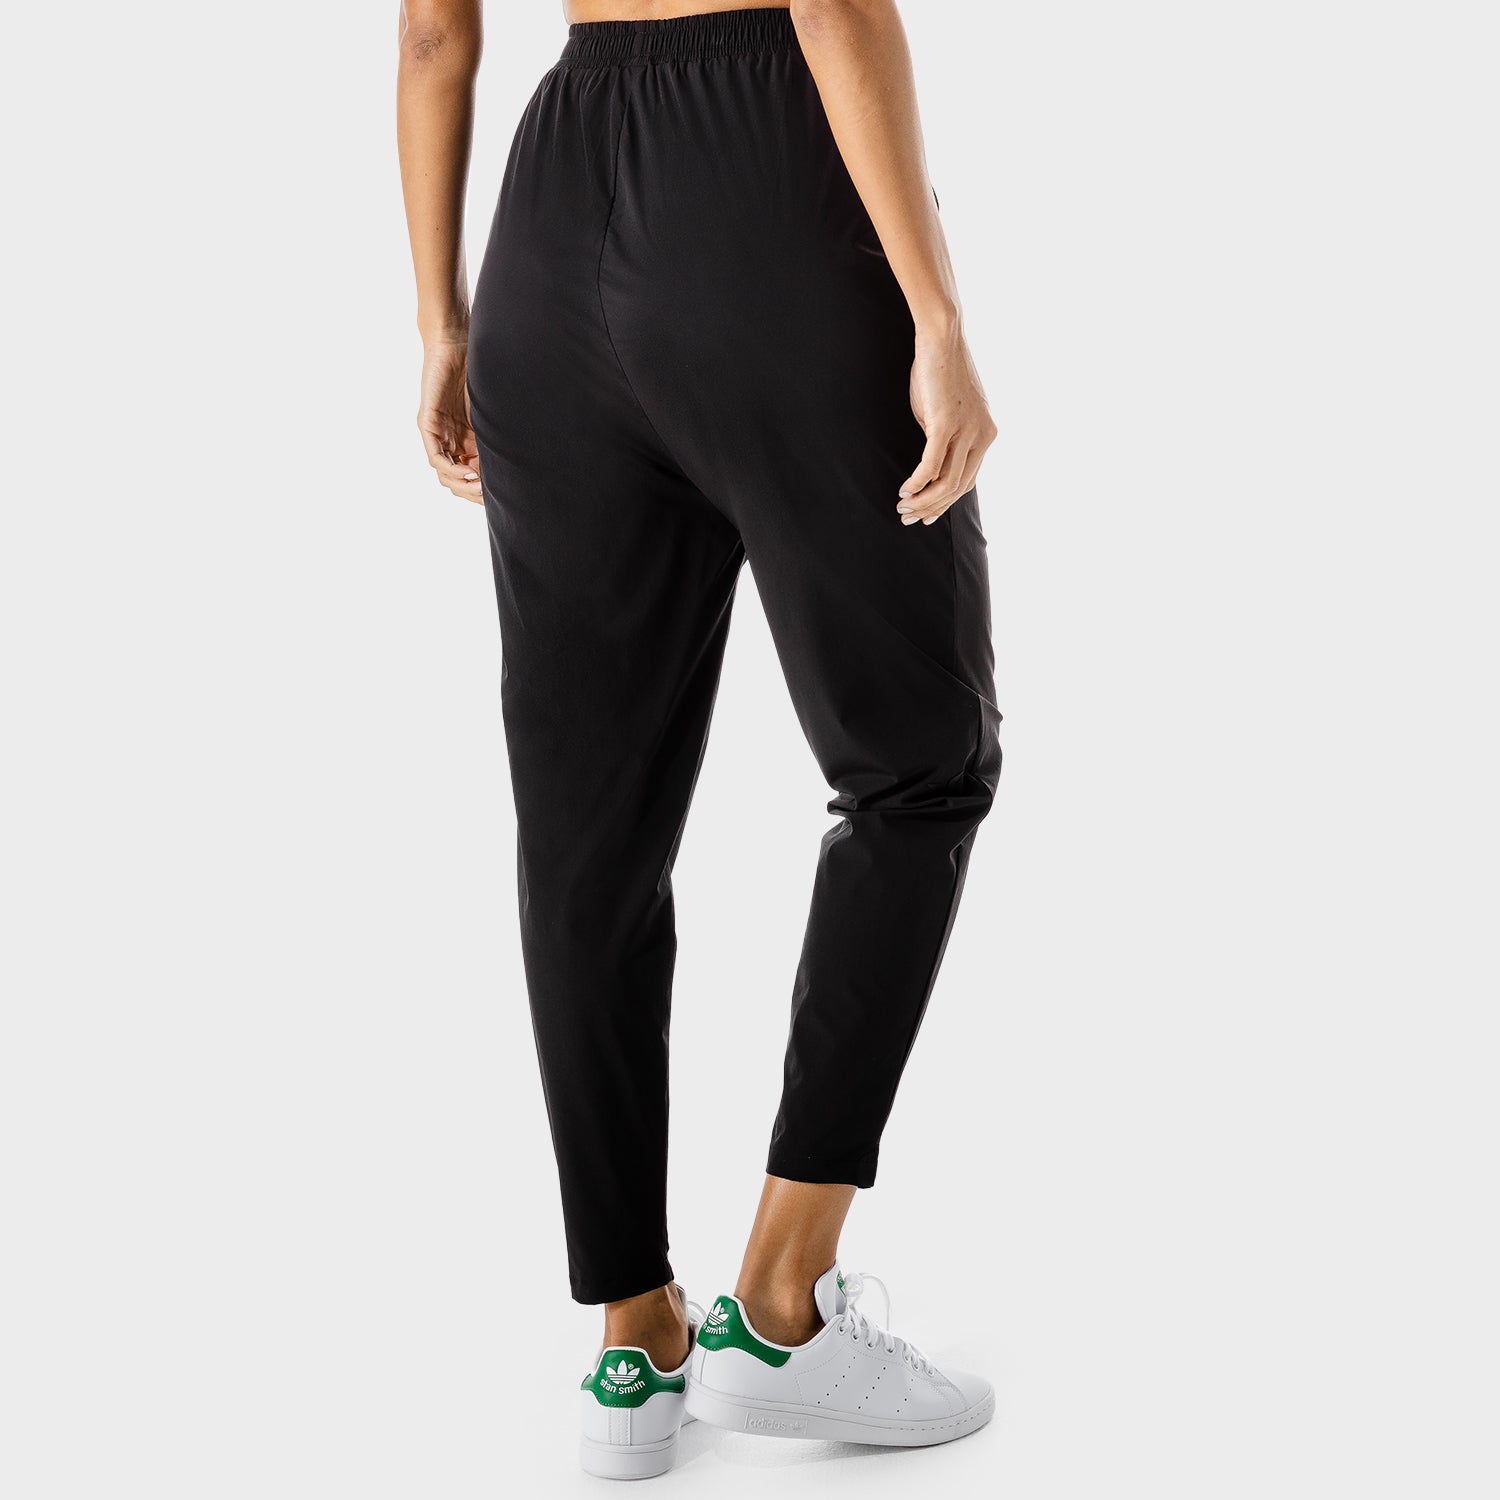 US, Women's Fitness - Wrap Pants - Black